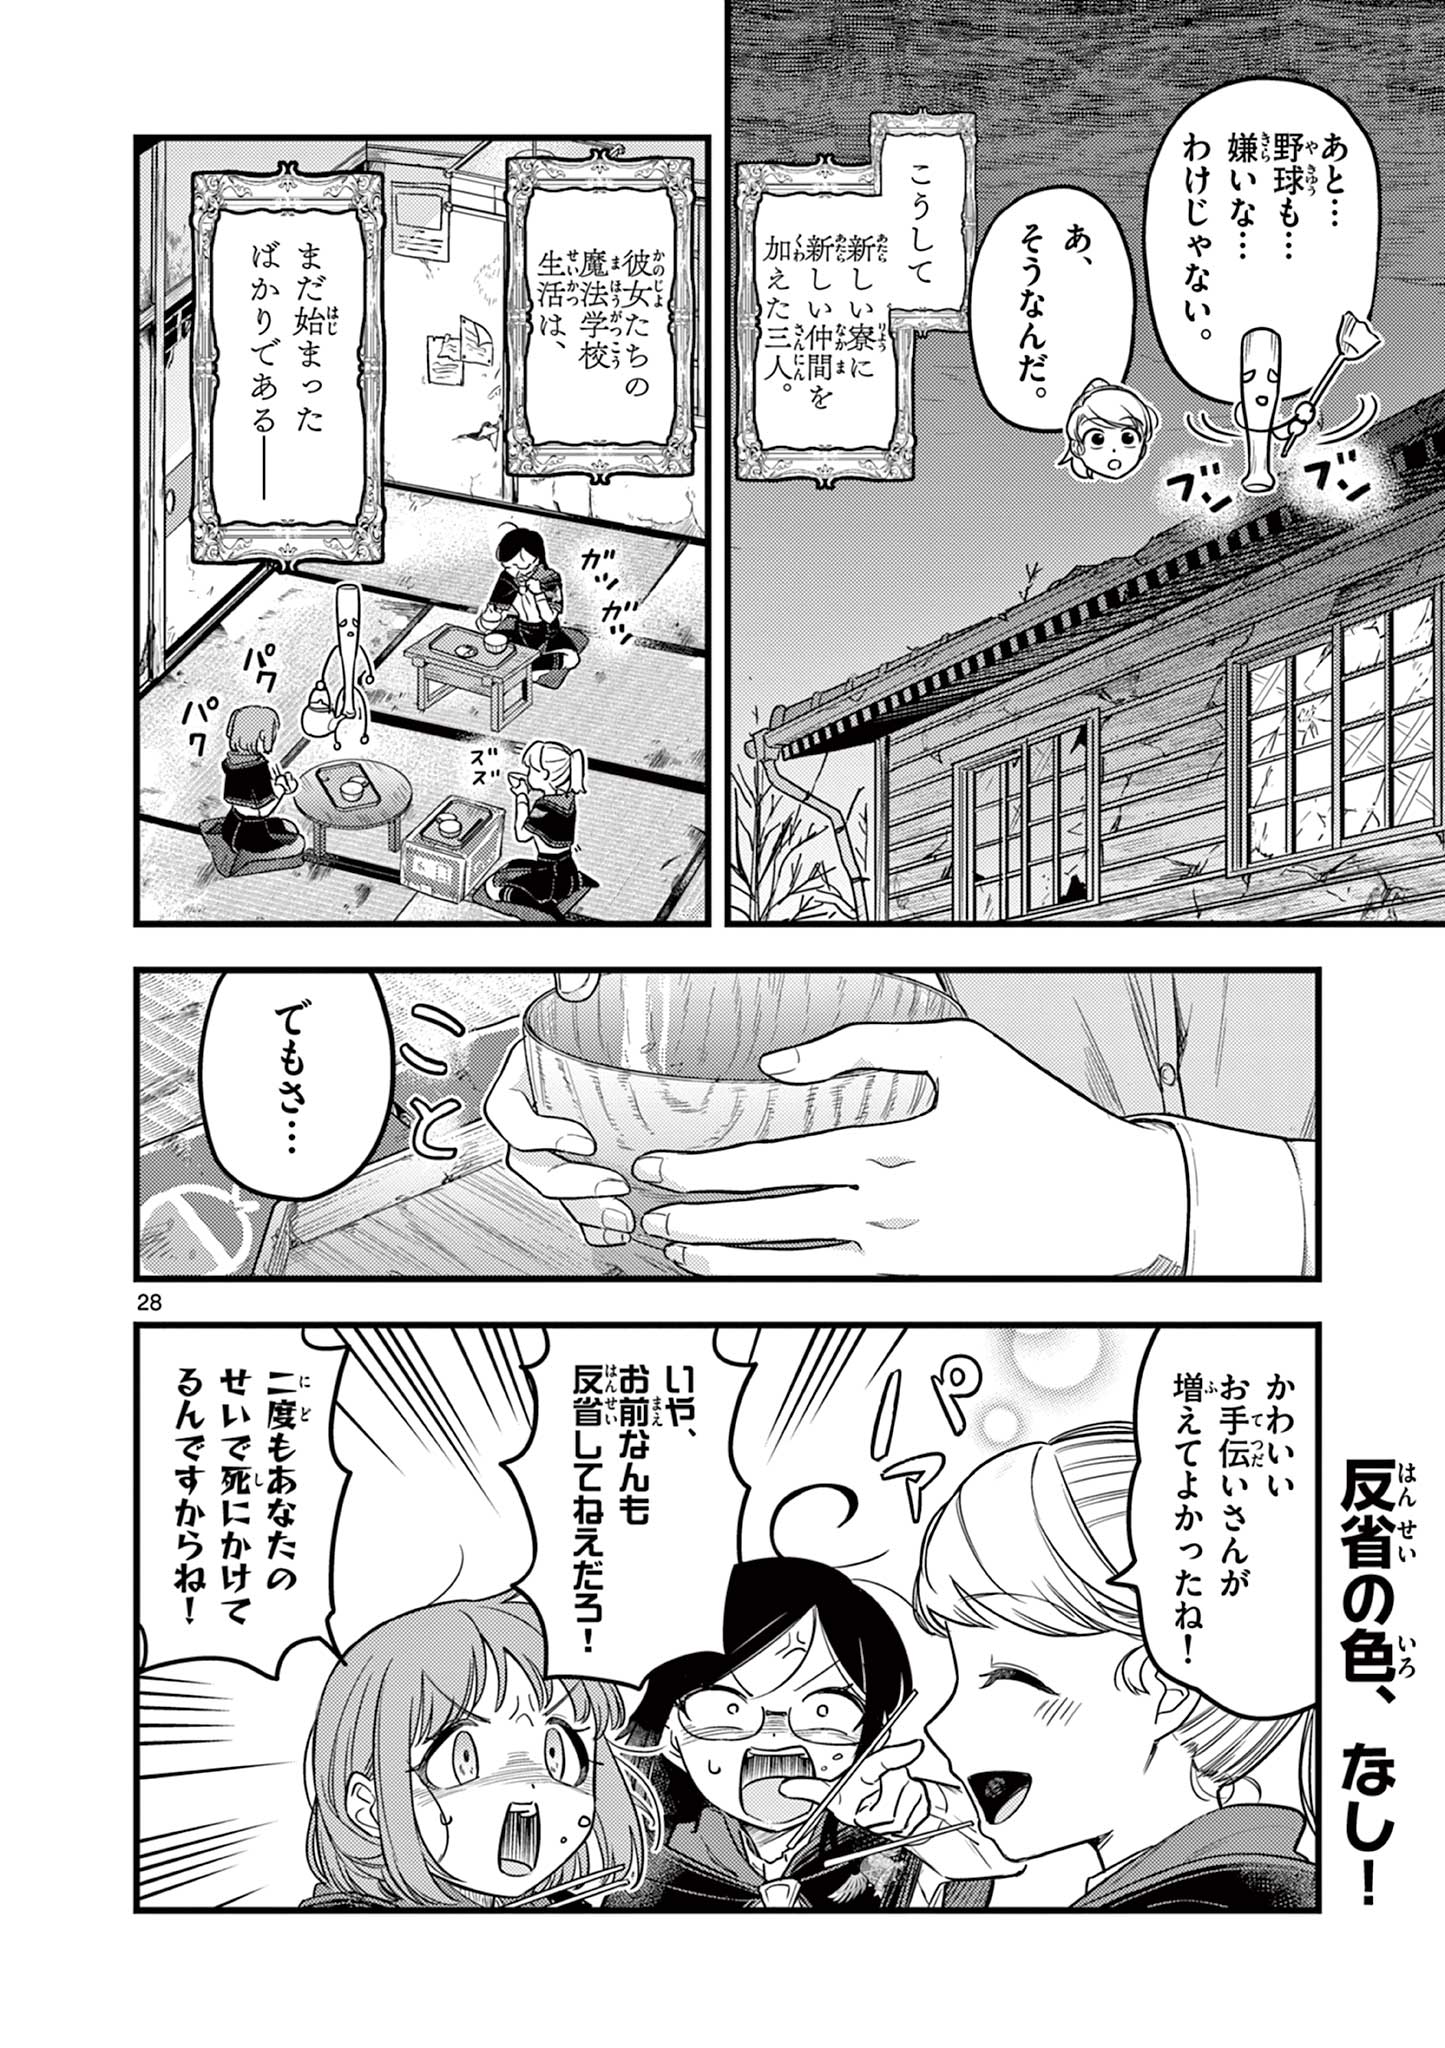 Kuro Mahou Ryou no Sanakunin - Chapter 2 - Page 28